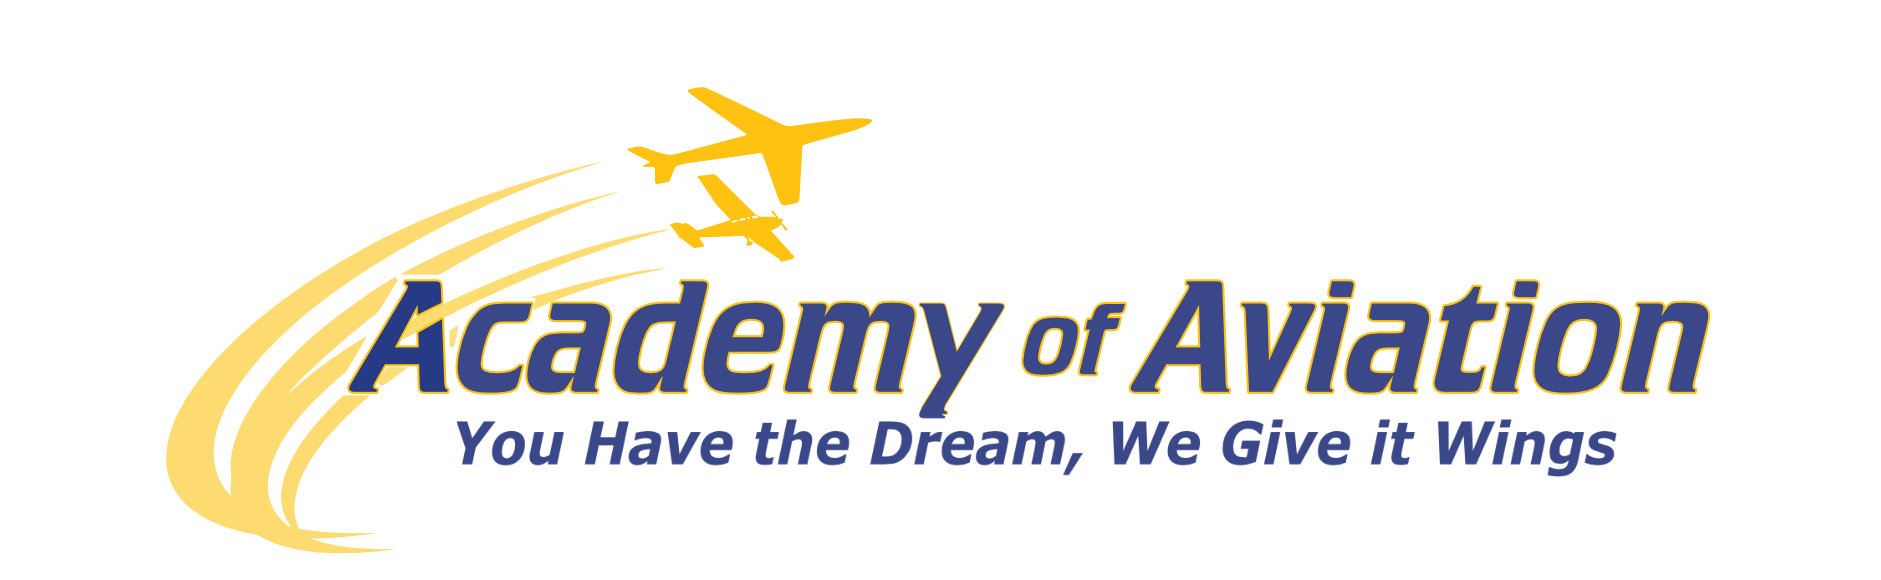 Academy of Aviation Flight School